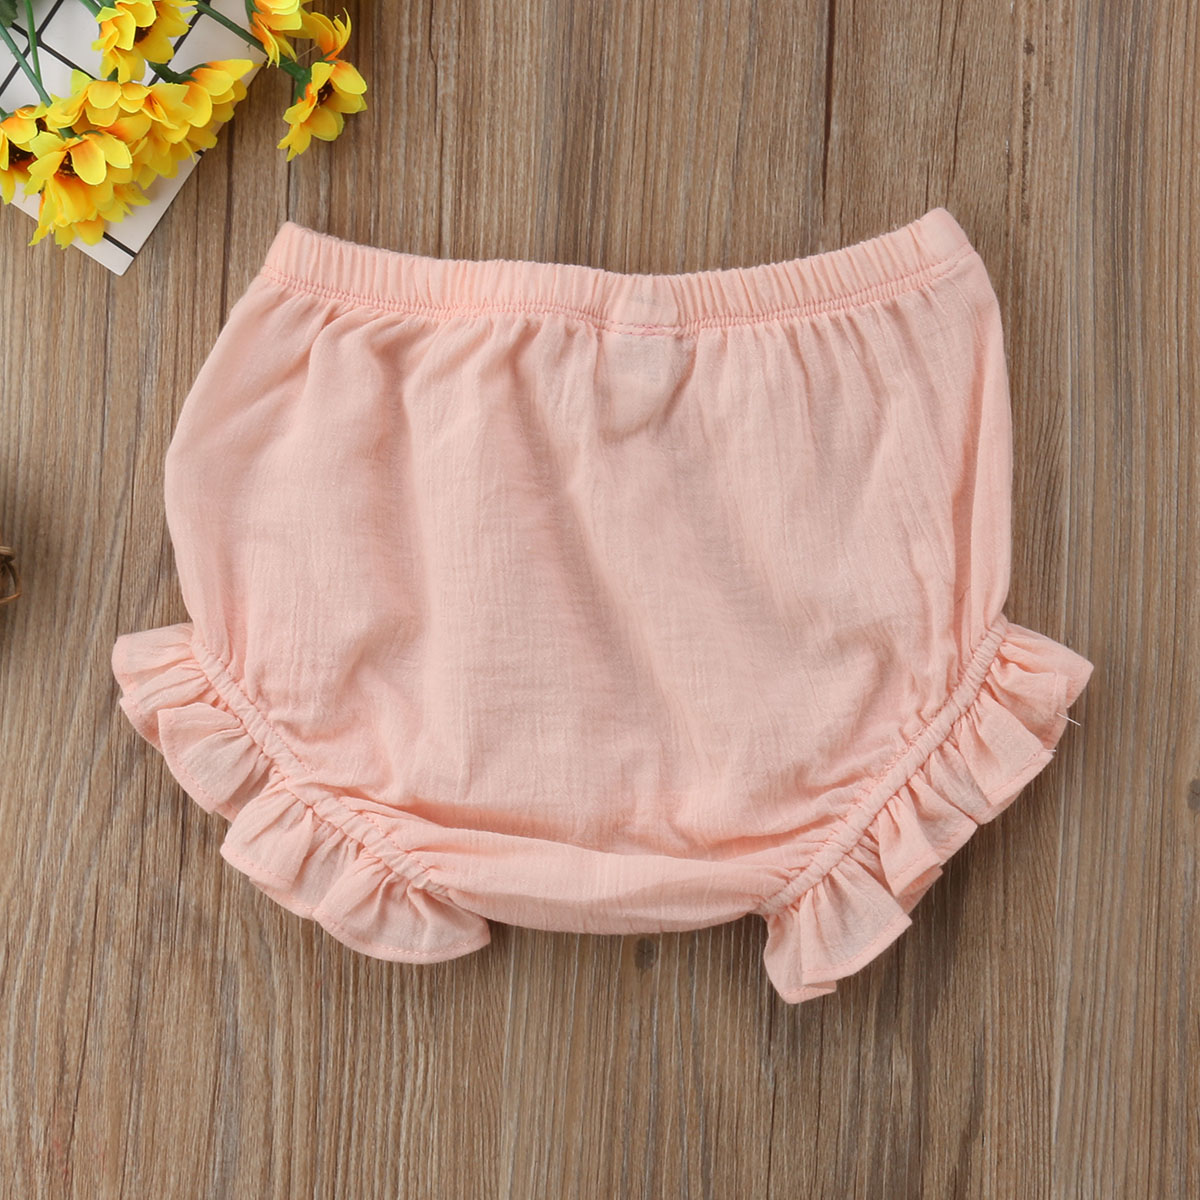 2018 Toddler Infant Baby Boy Girl Kid Tassel Solid Pants Shorts Bottoms PP Bloomers Summer Cute Panties